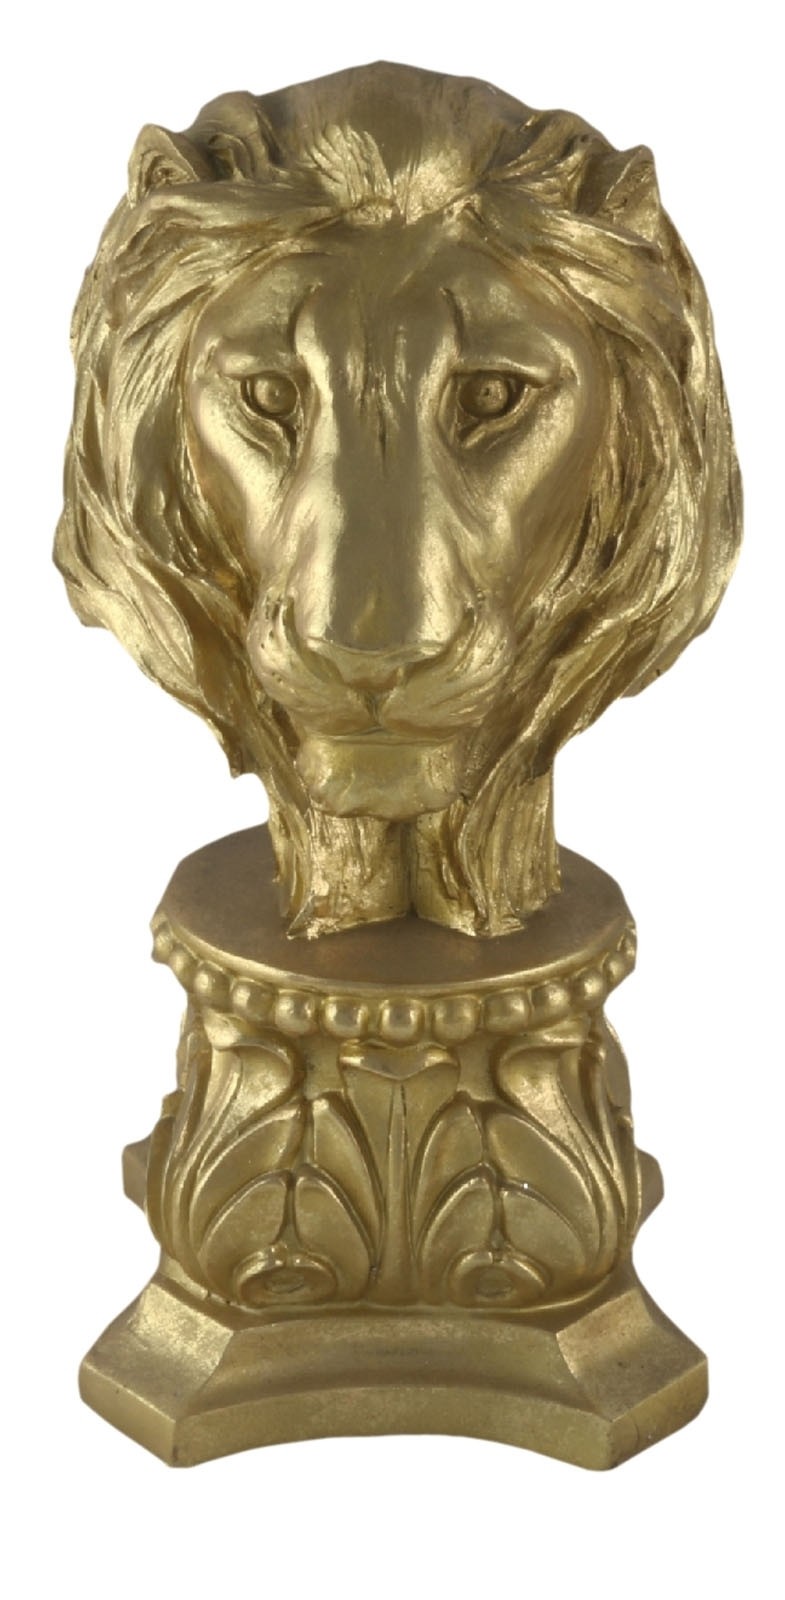 Lion Head Bust 36cm - Gold Finish